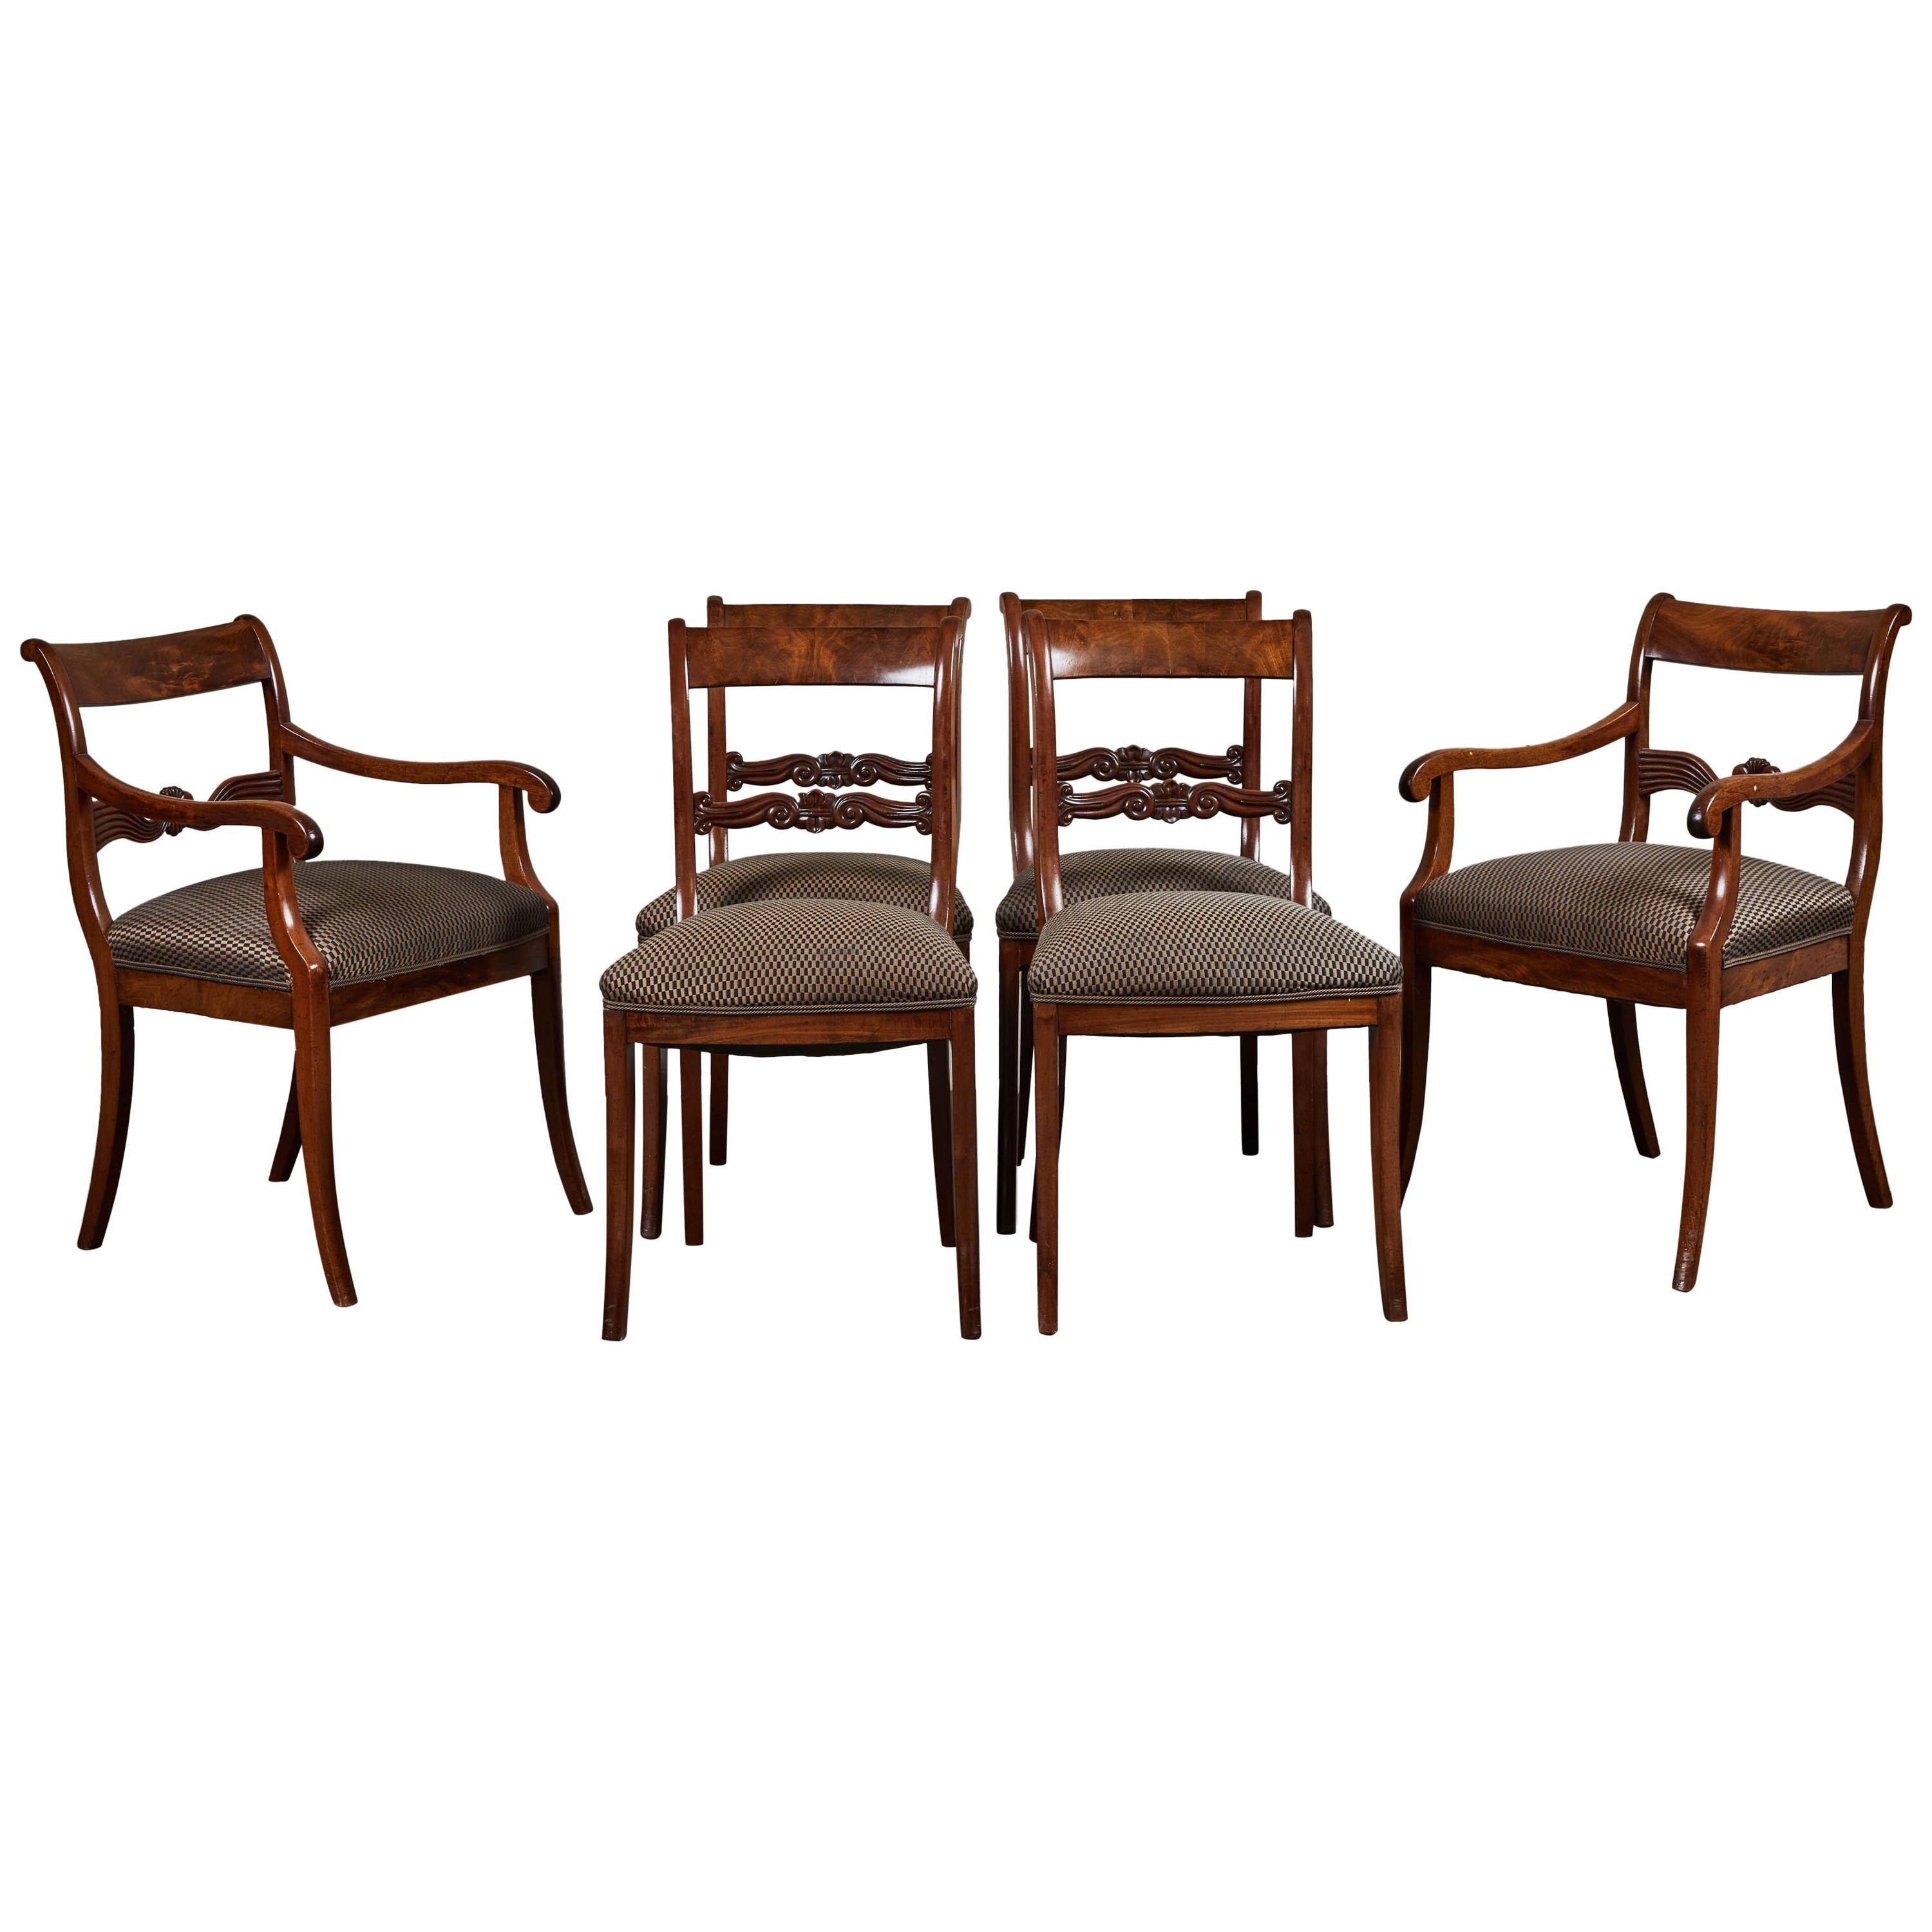 19th Century Set of 6 English Mahogany Dining Chairs